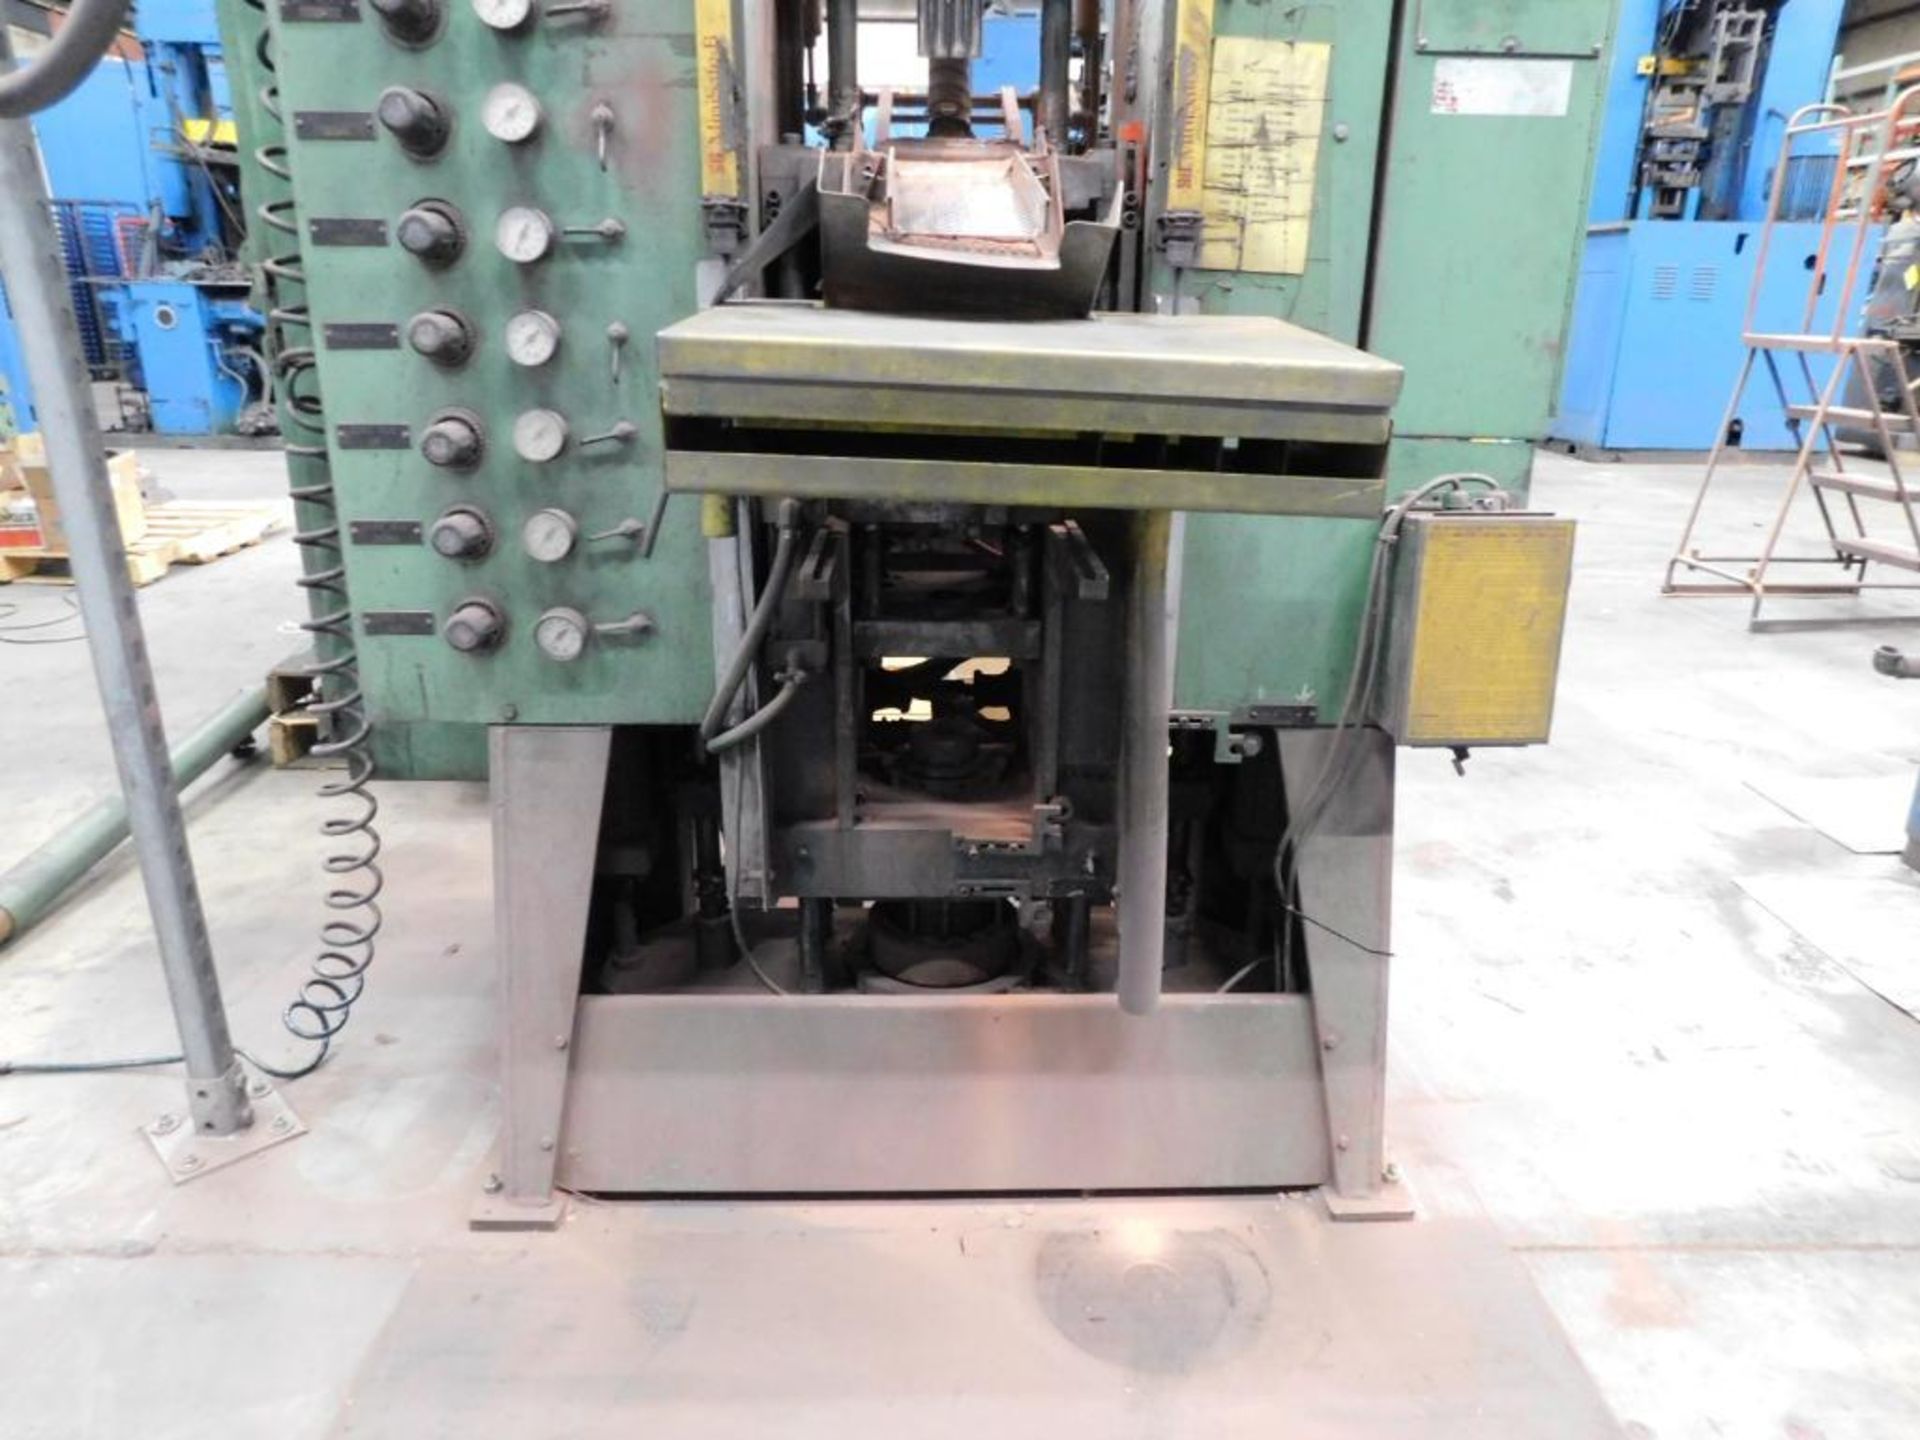 Gasbarre Powder Compacting Press, Mechanical, Model 30 Standard, S/N: 86256, 30 Ton Maximum Pressing - Image 10 of 22